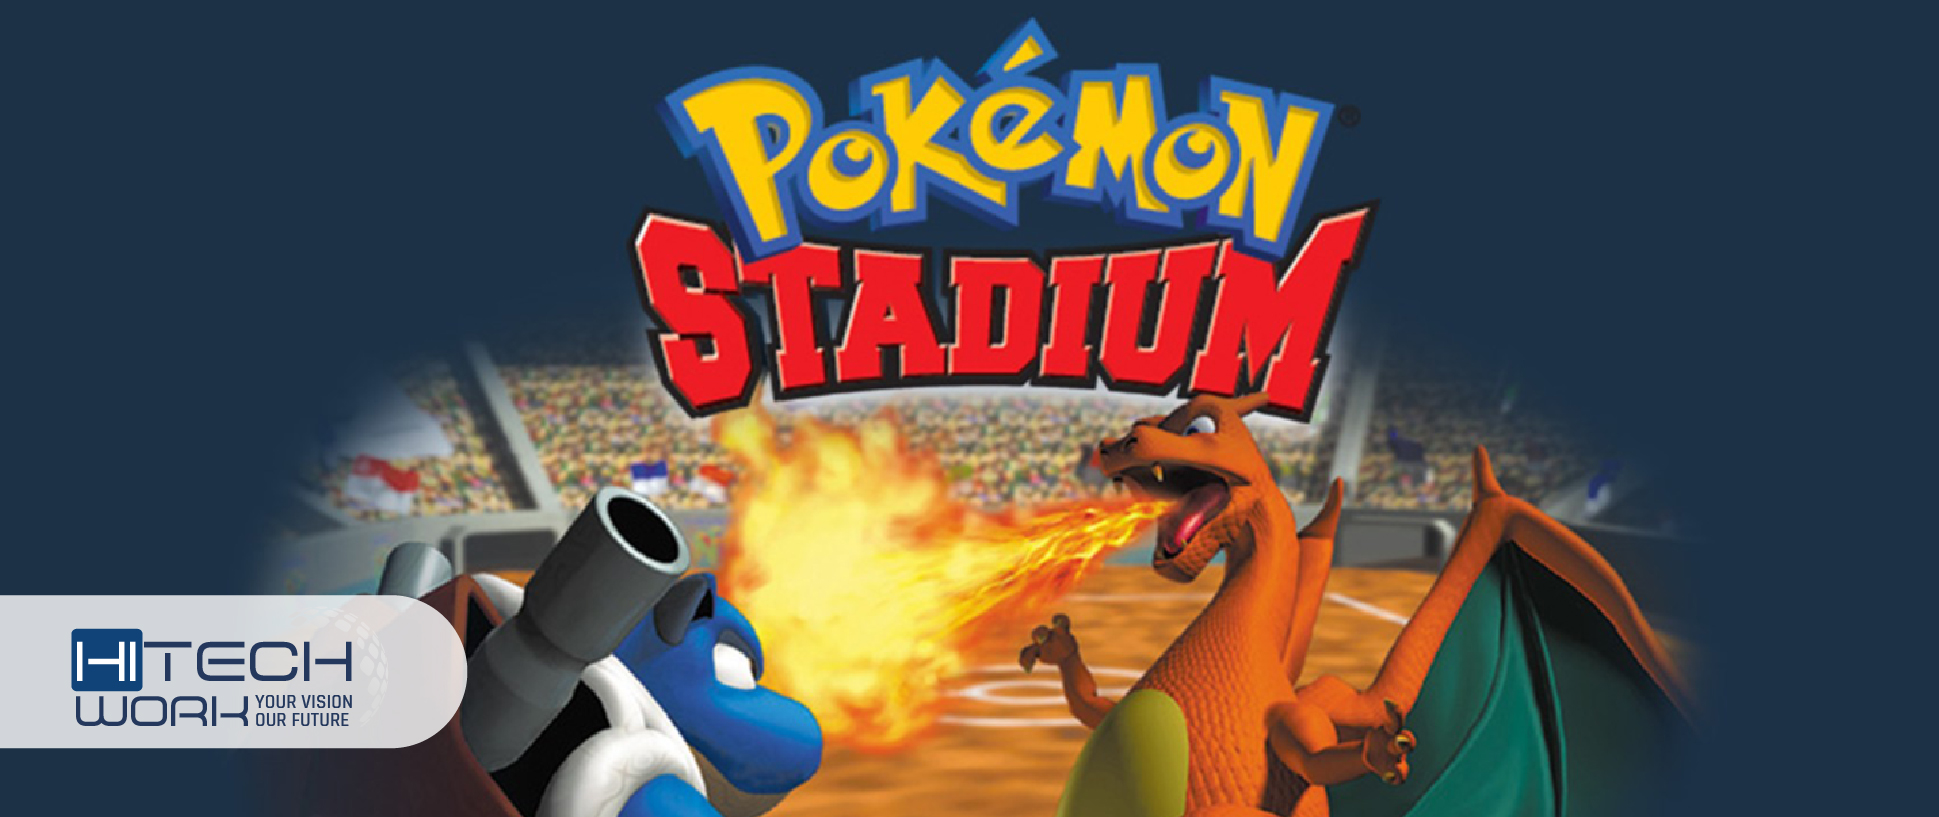 Pokemon Stadium is Coming to Nintendo Switch